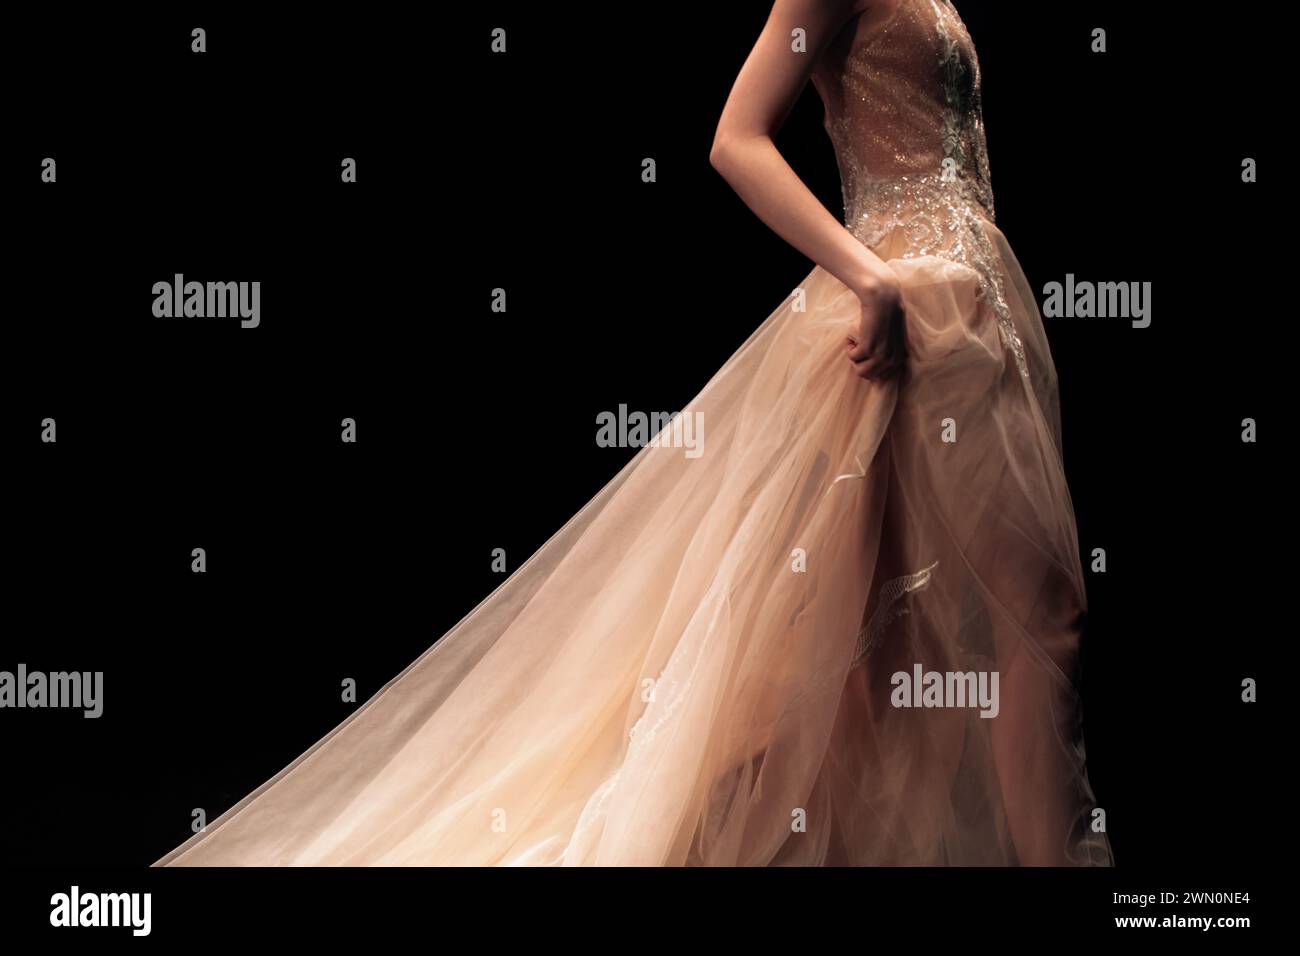 Detalles de la moda de la noche larga beige elegante vestido exuberante en una figura femenina sobre un fondo negro. Moda femenina ropa elegante Foto de stock